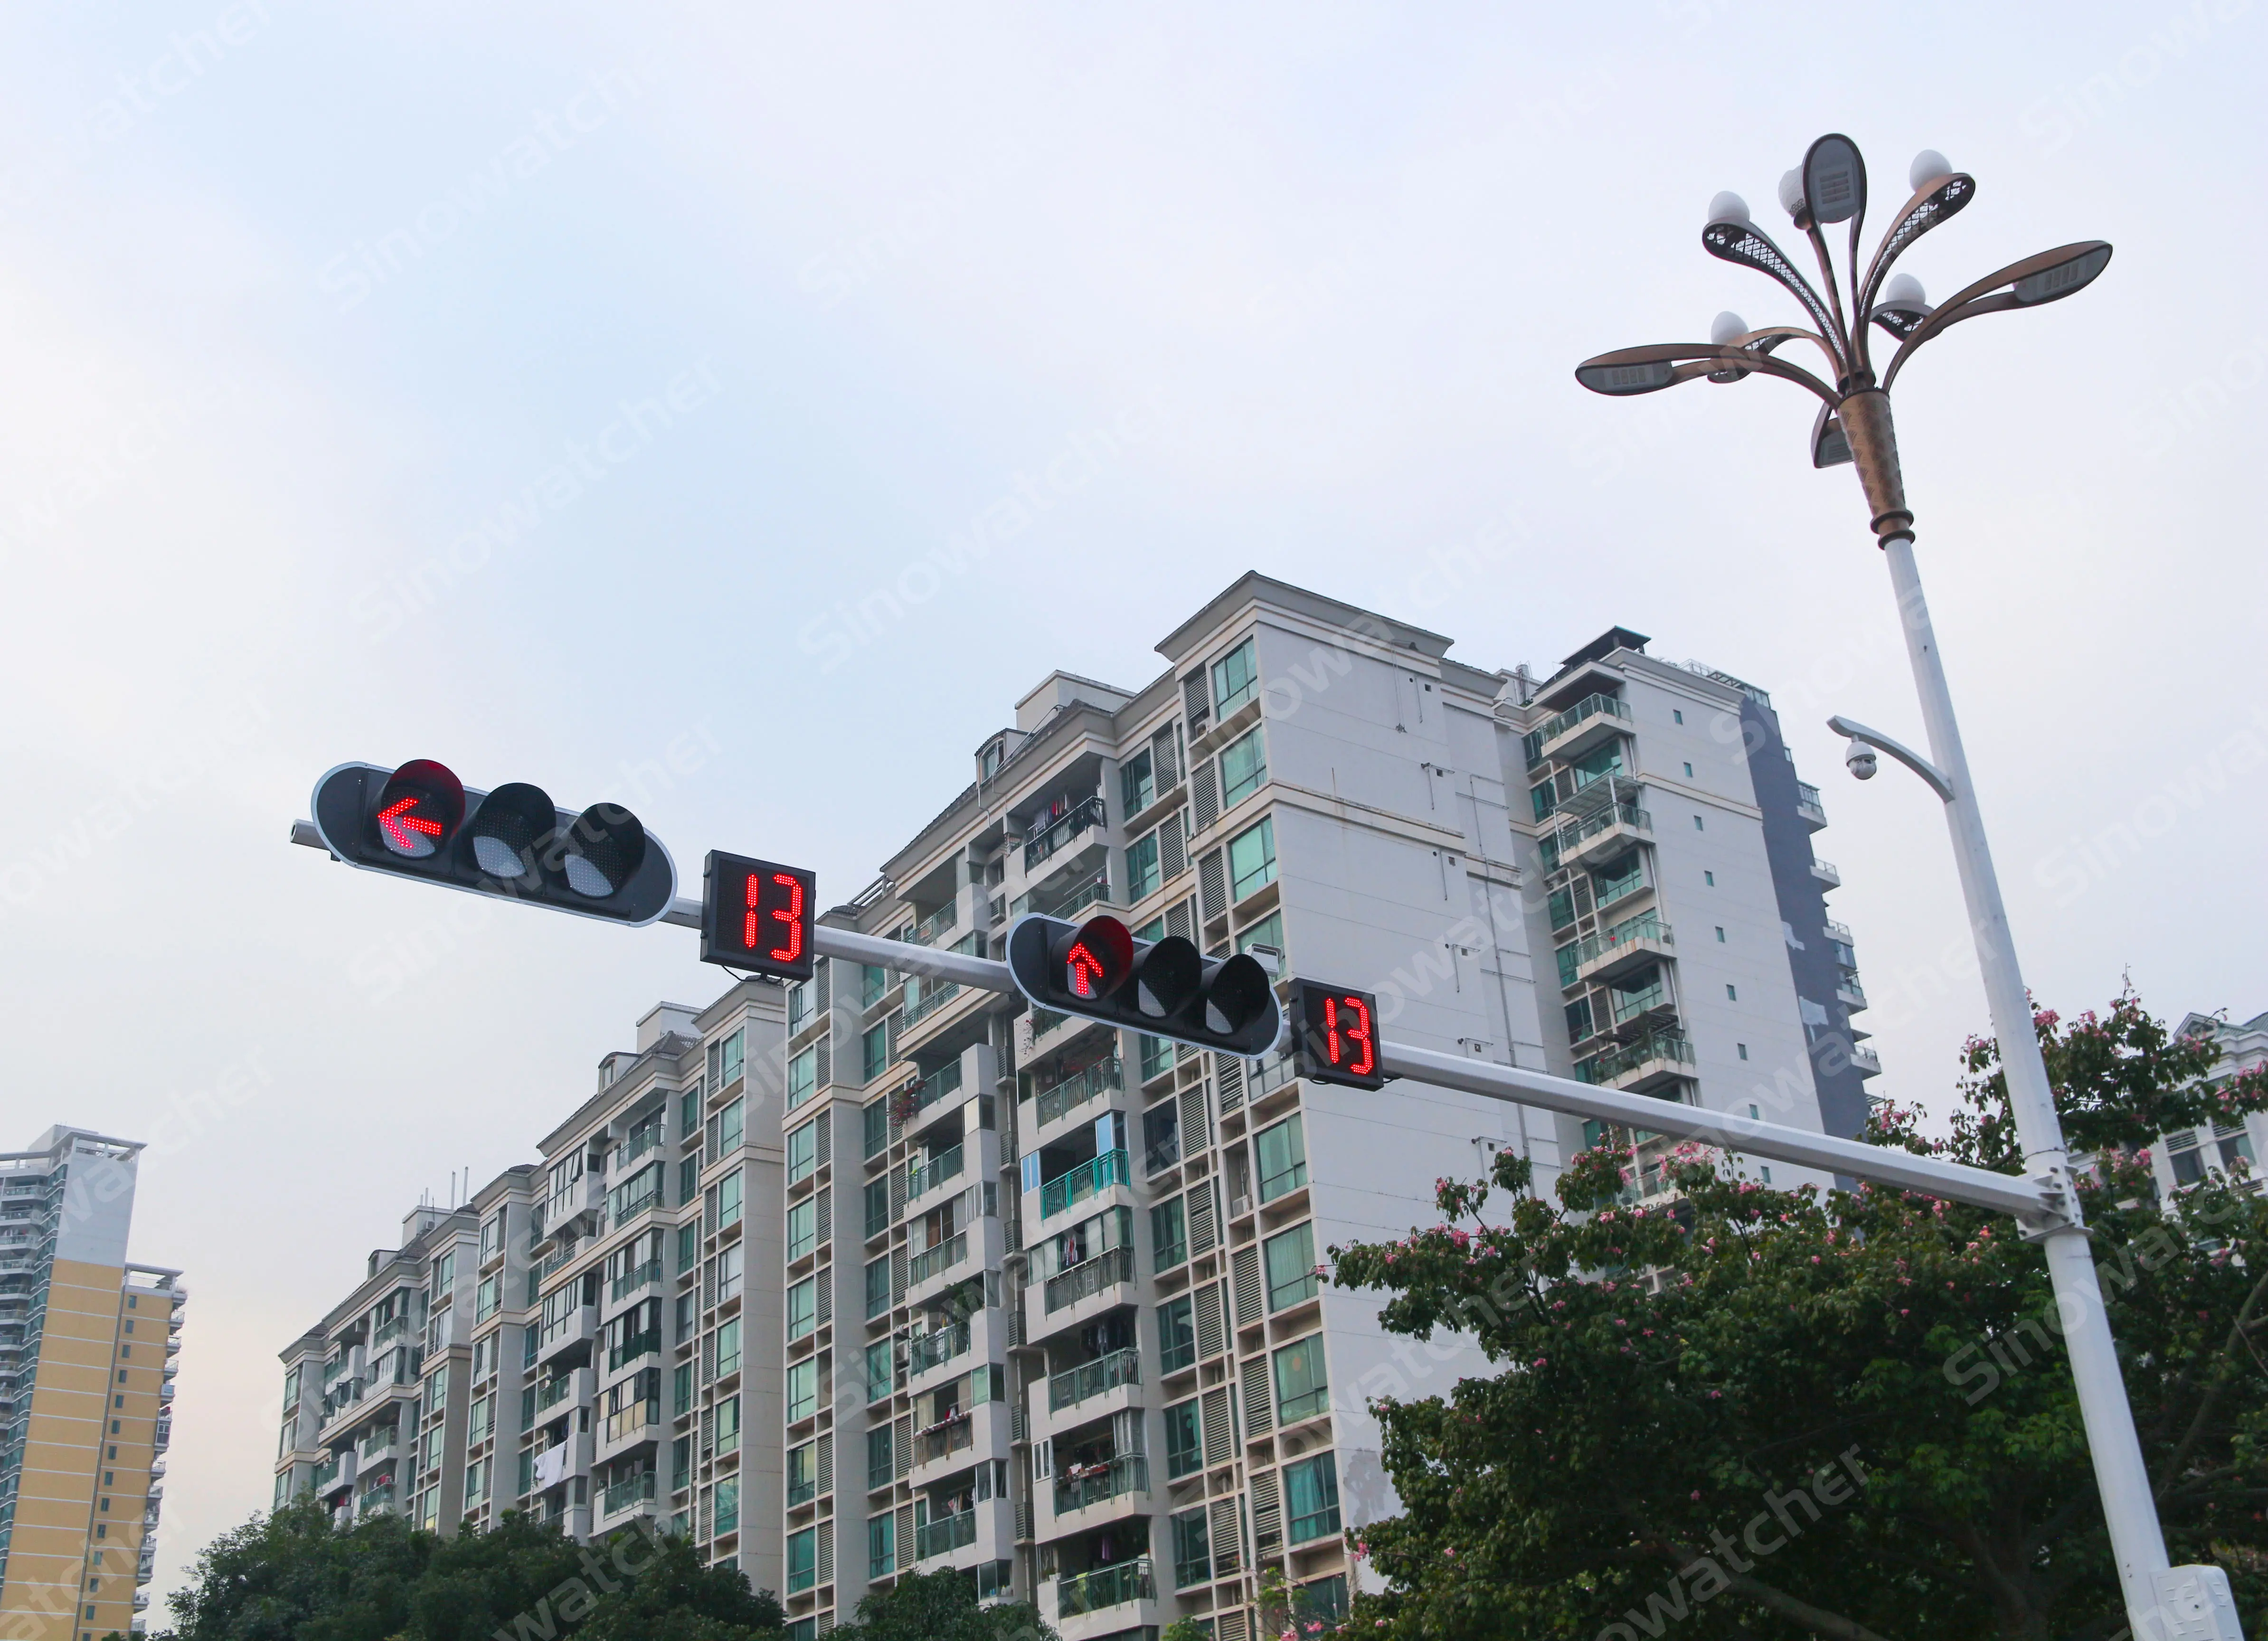 Led traffic light in Shenzhen